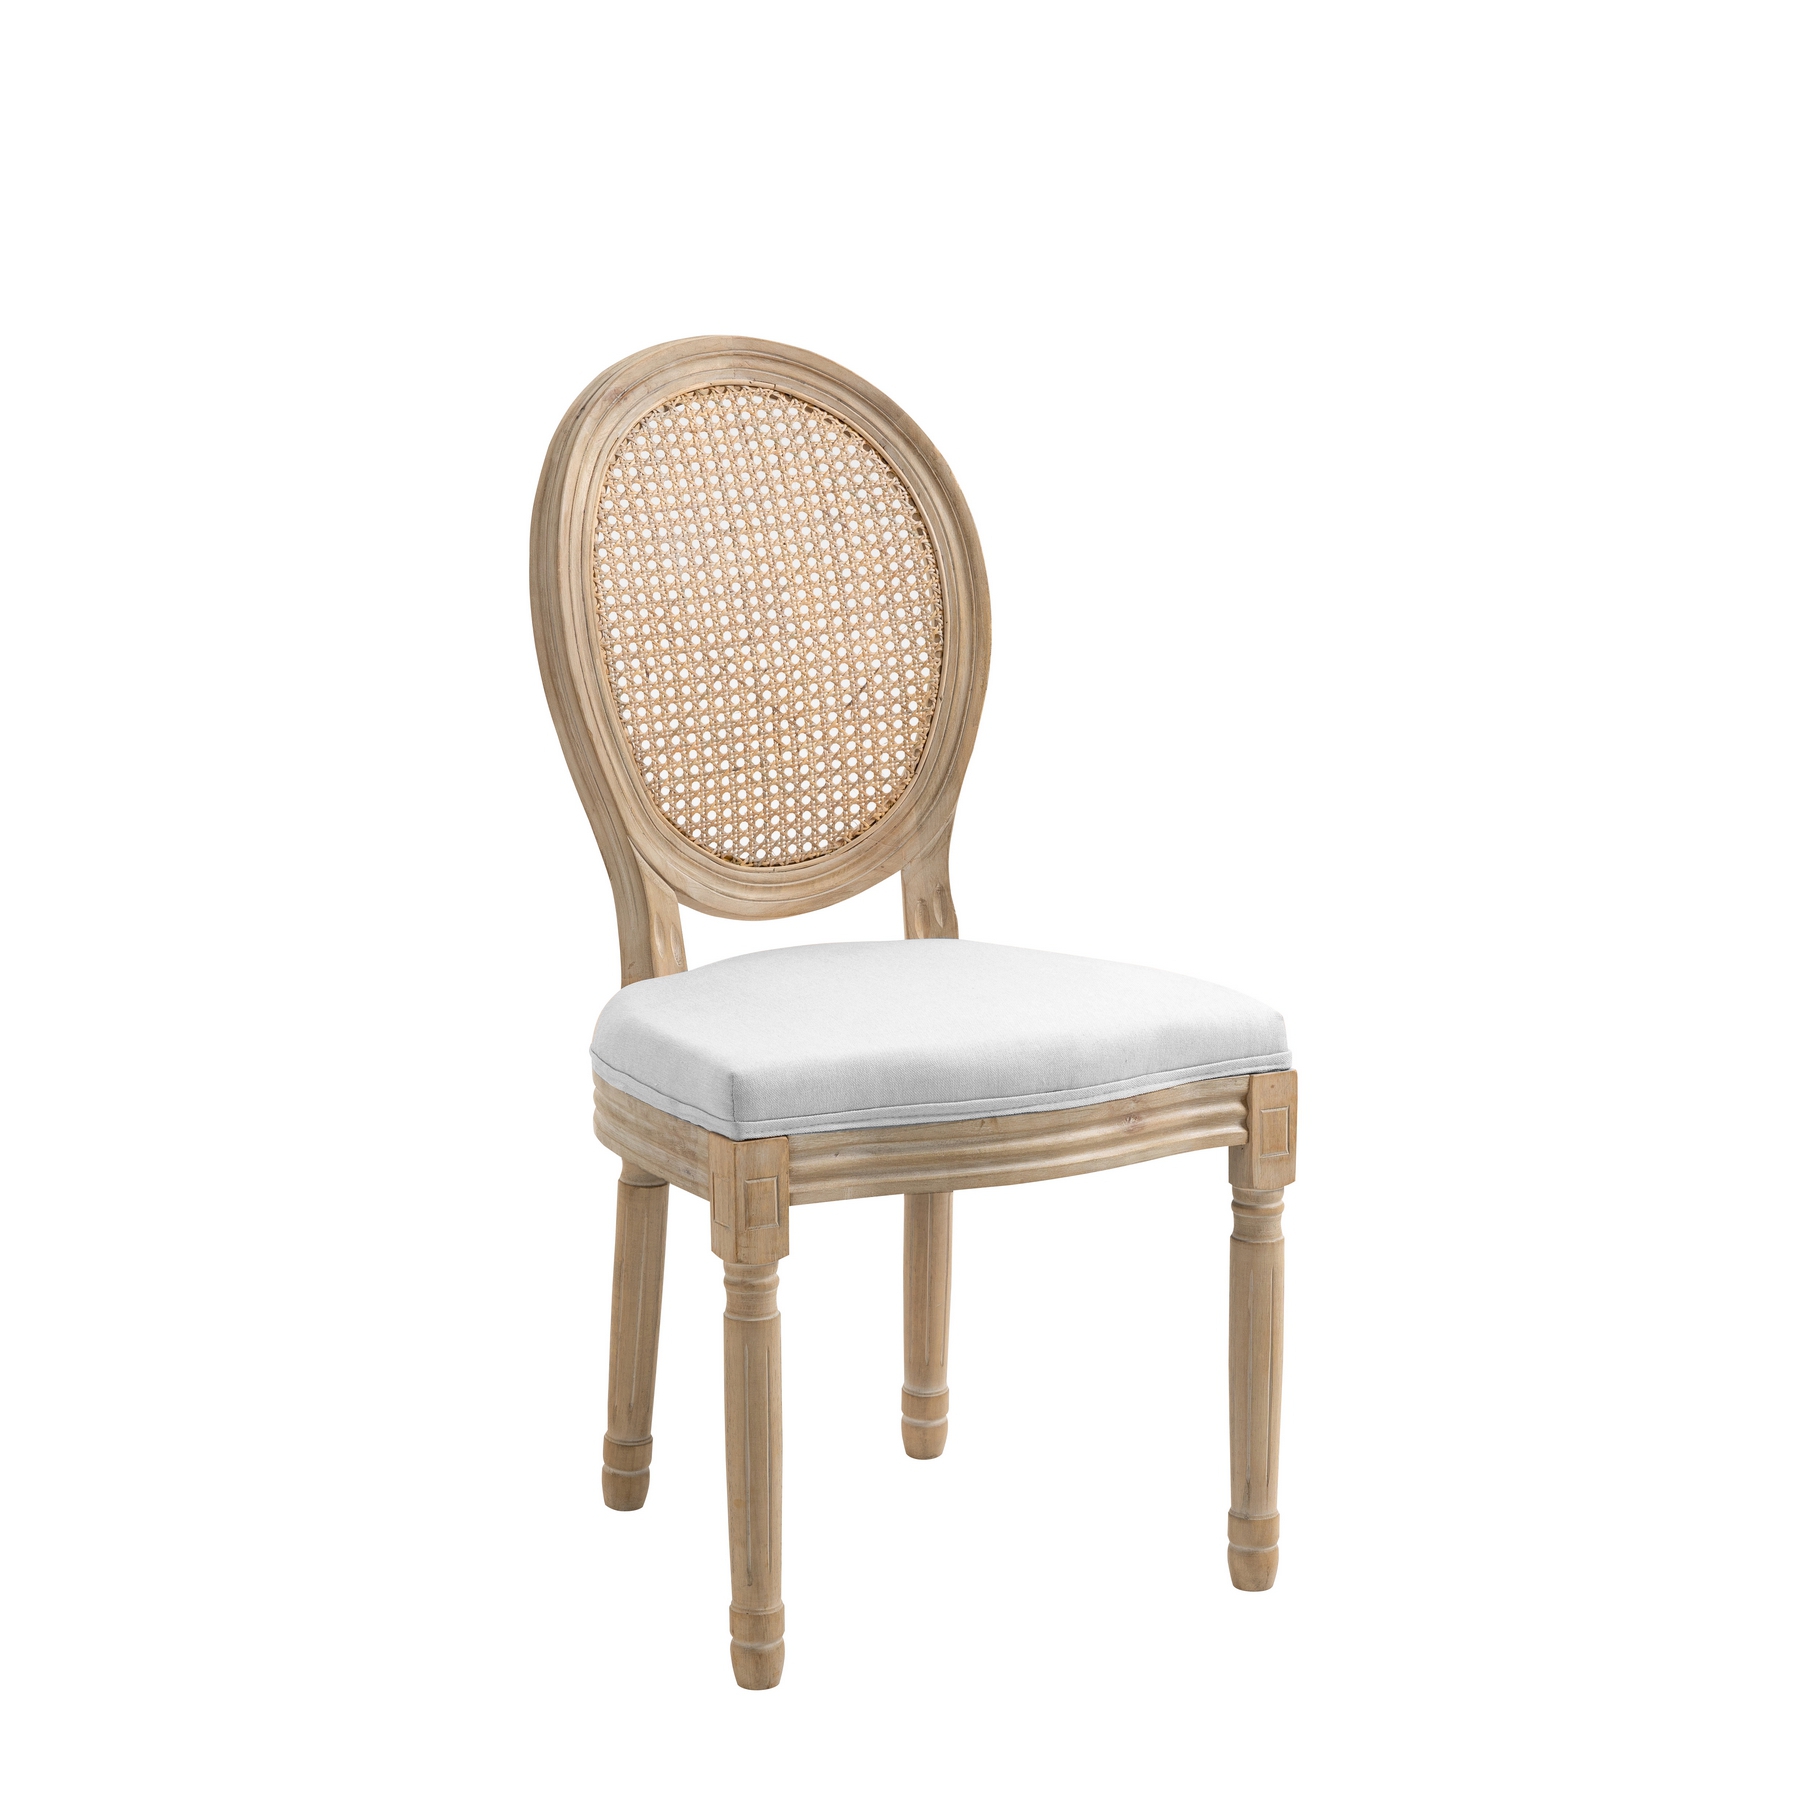 NORDLYS Richelieu spisebordsstol - grå stof, rattan og gummitræ